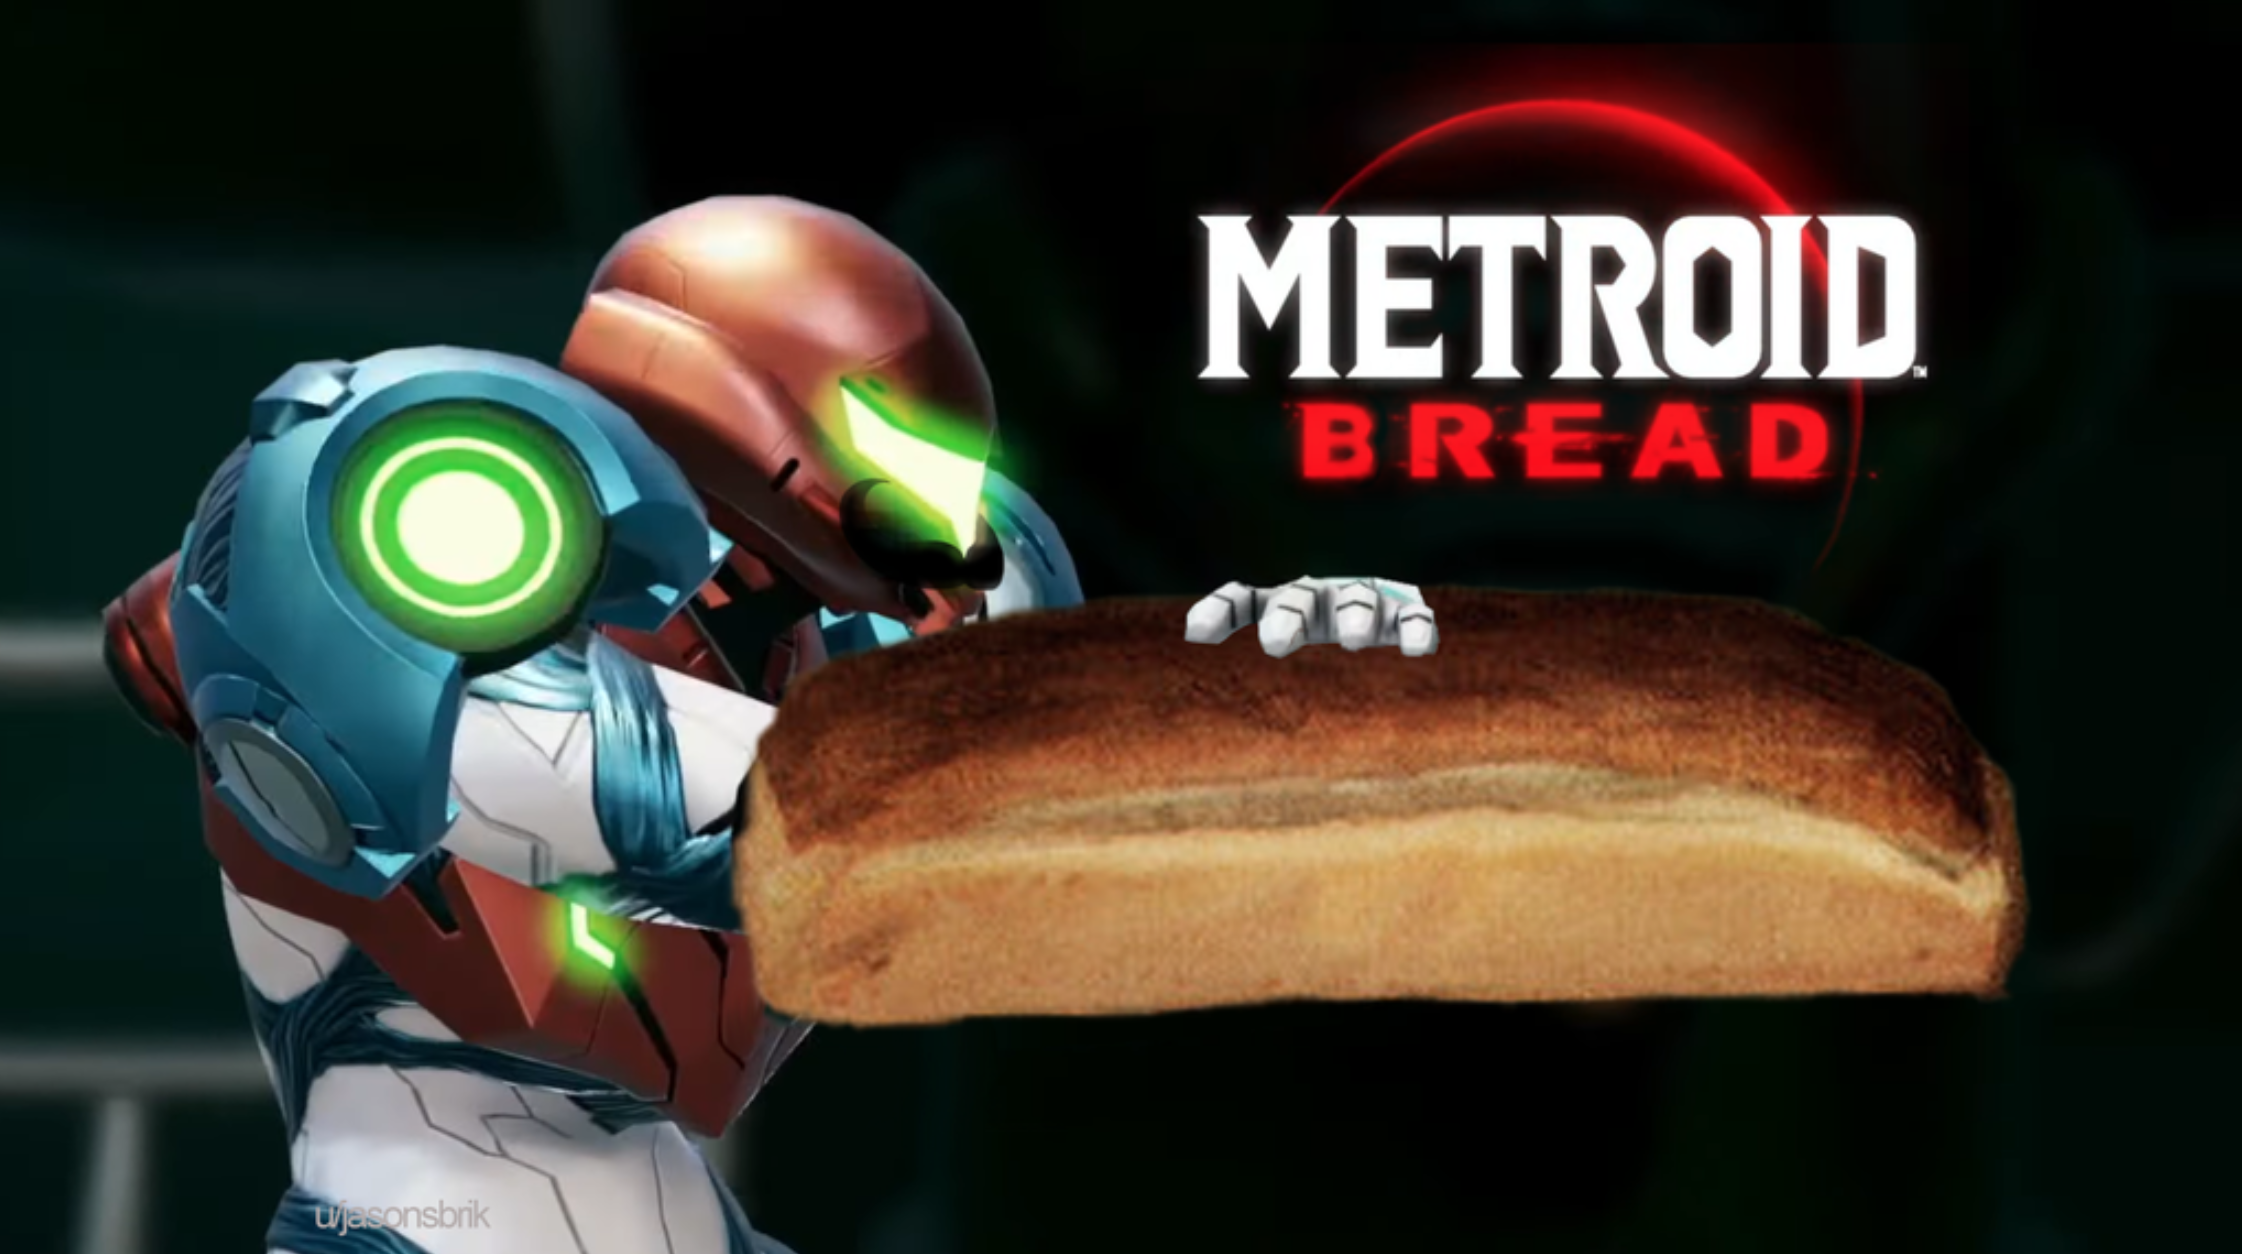 funny gaming memes - games - Metroid Bread no